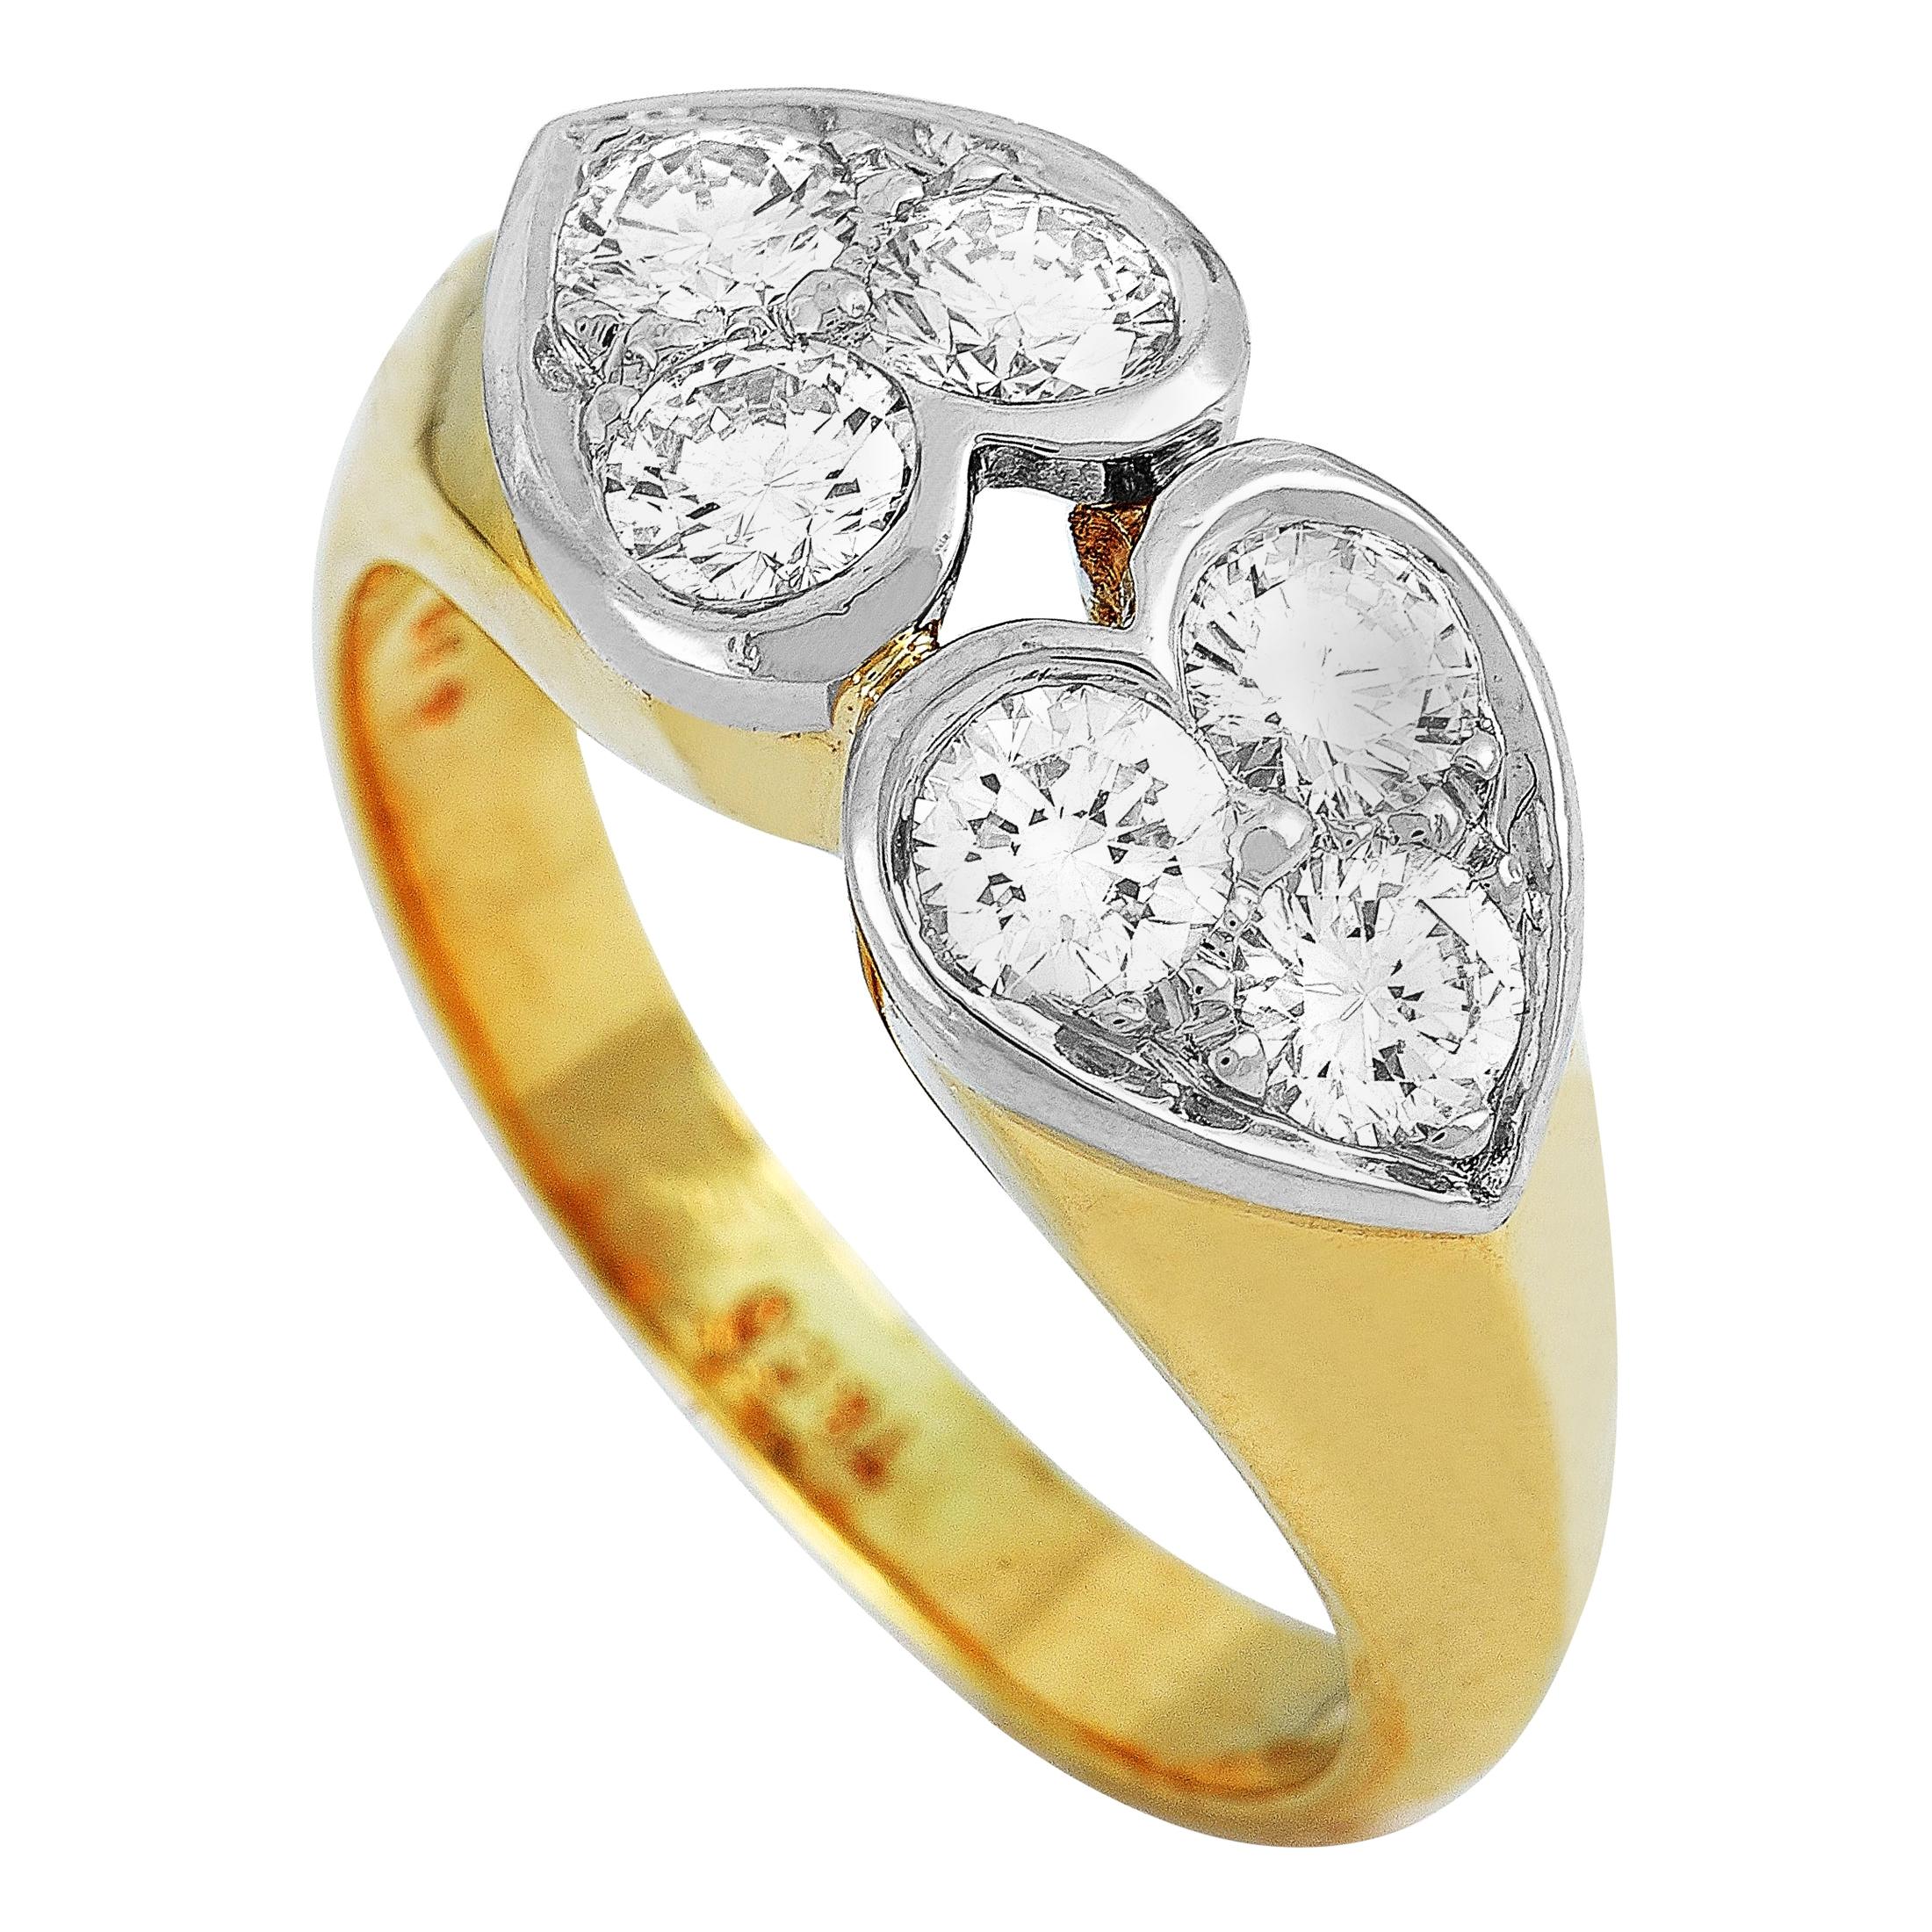 Tiffany & Co. 18 Karat Yellow and White Gold 0.70 Carat Diamond Ring